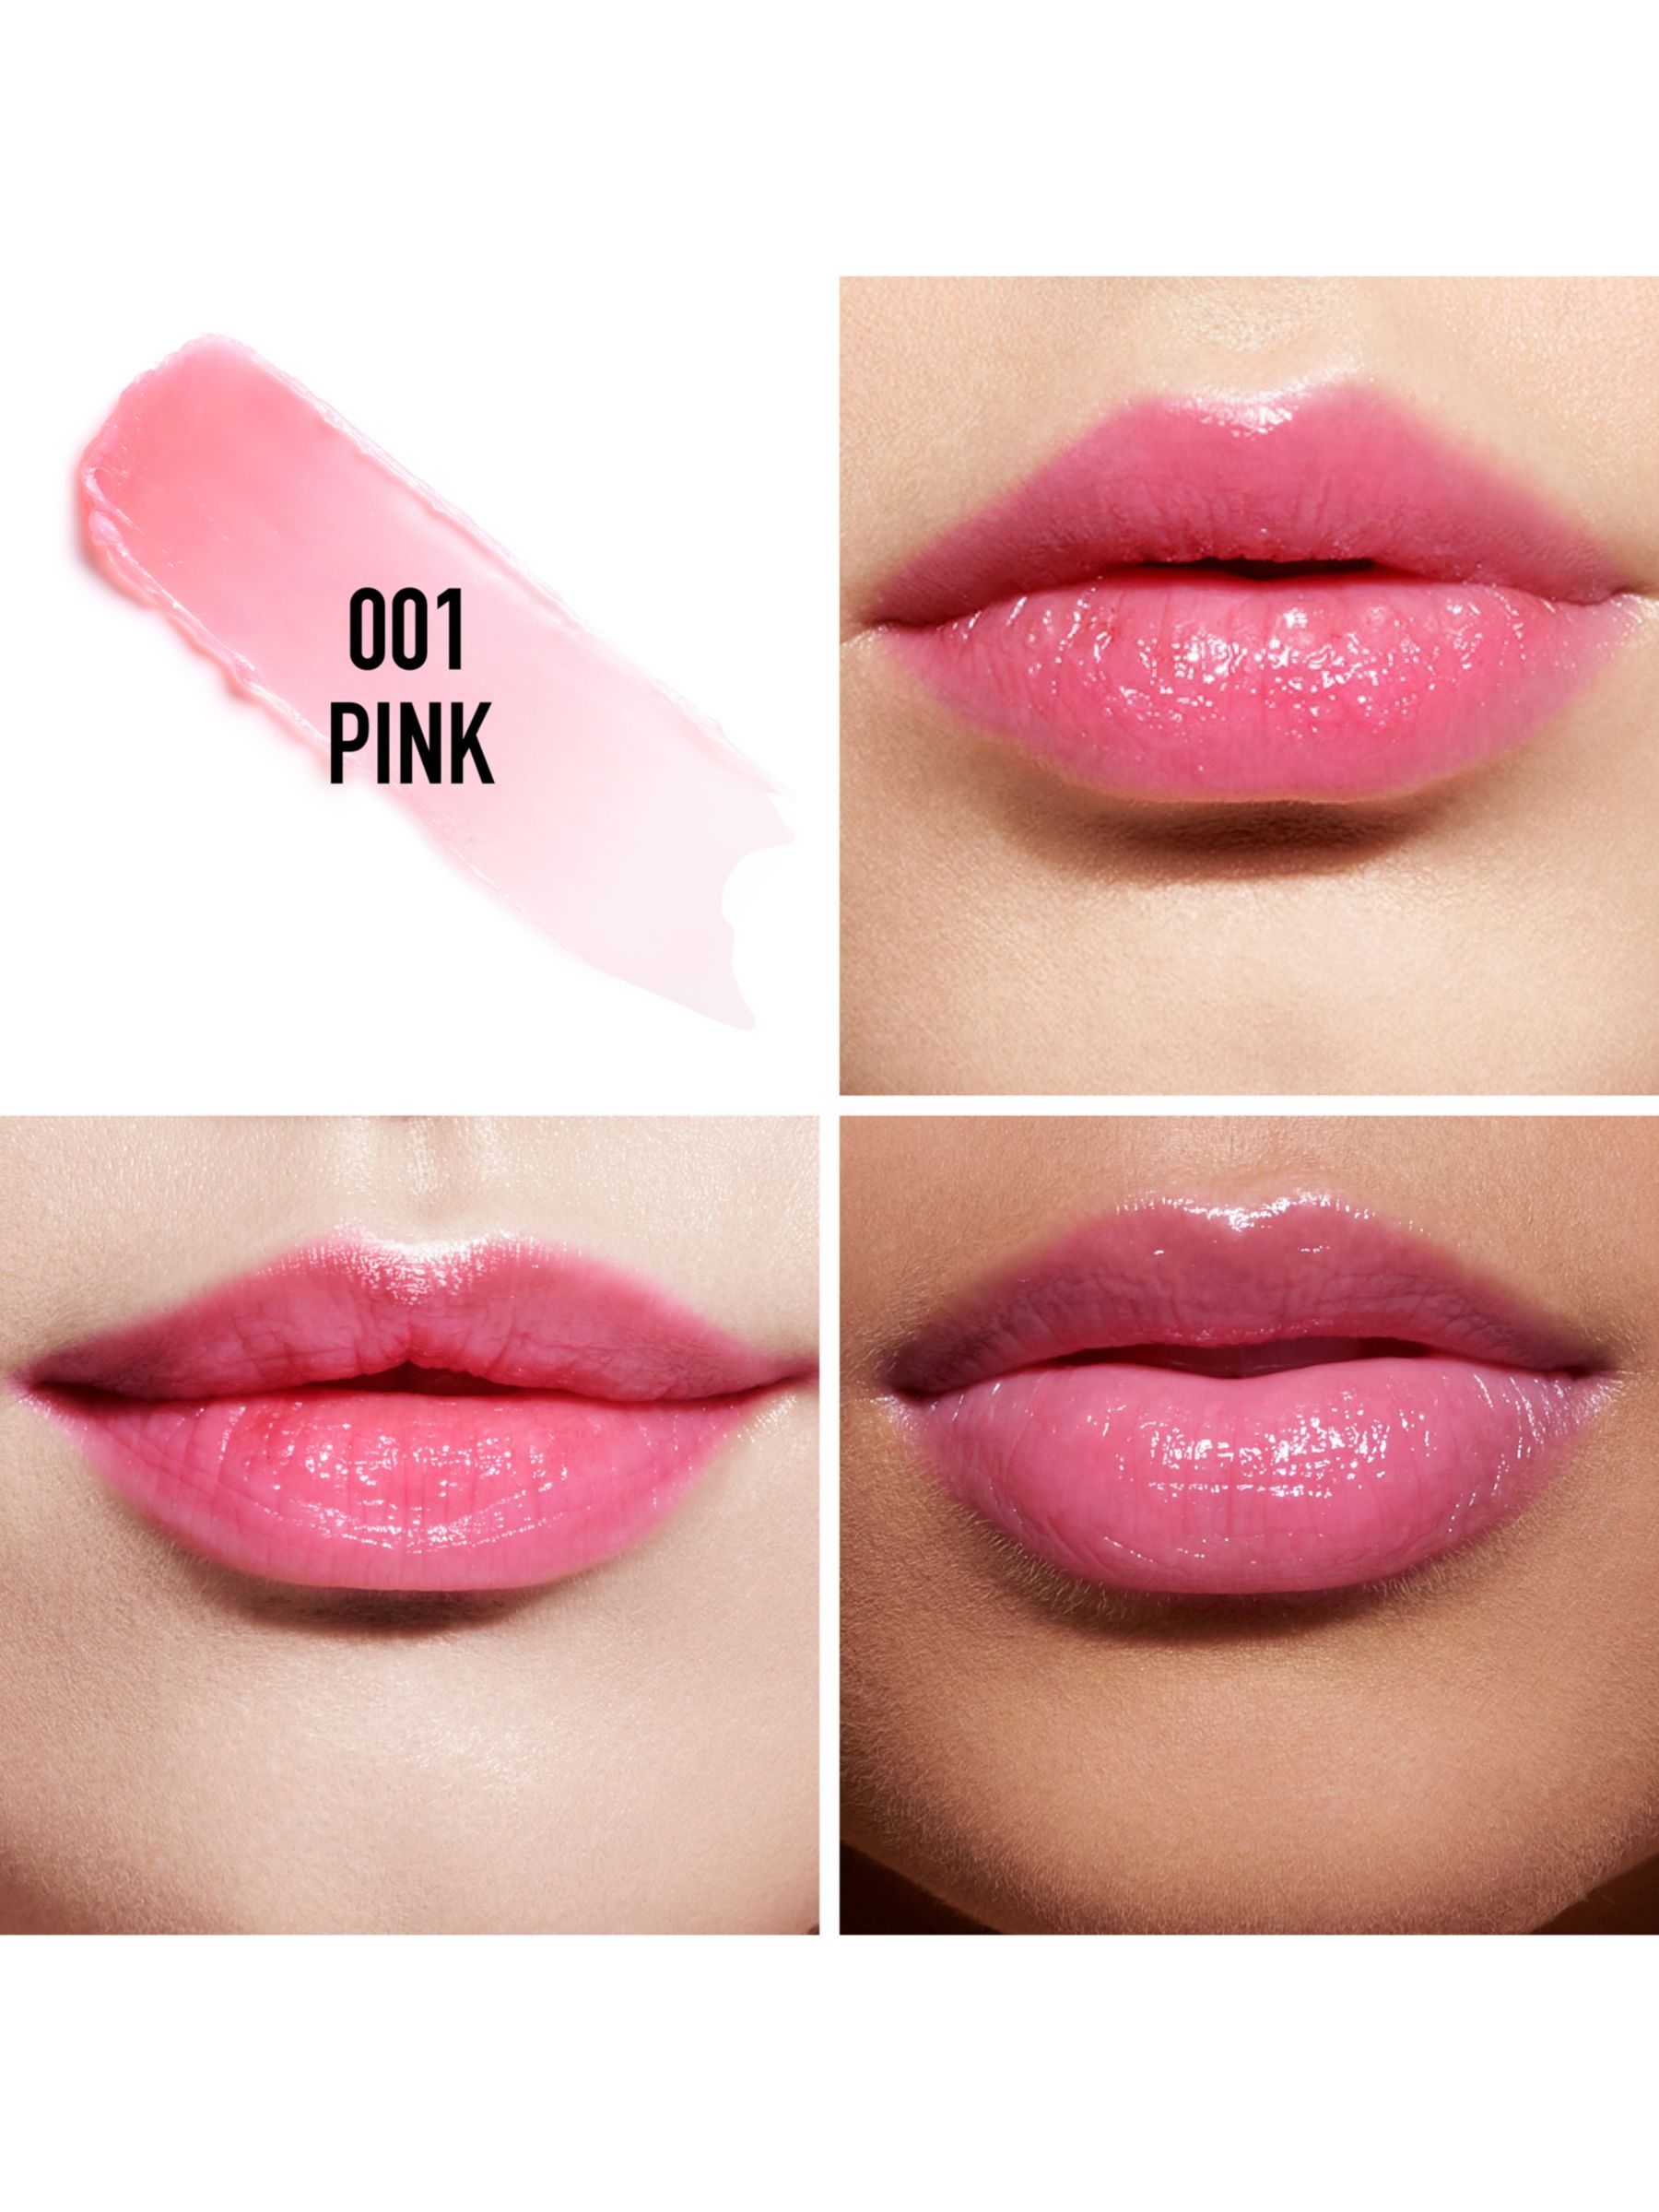 dior addict lip glow pink